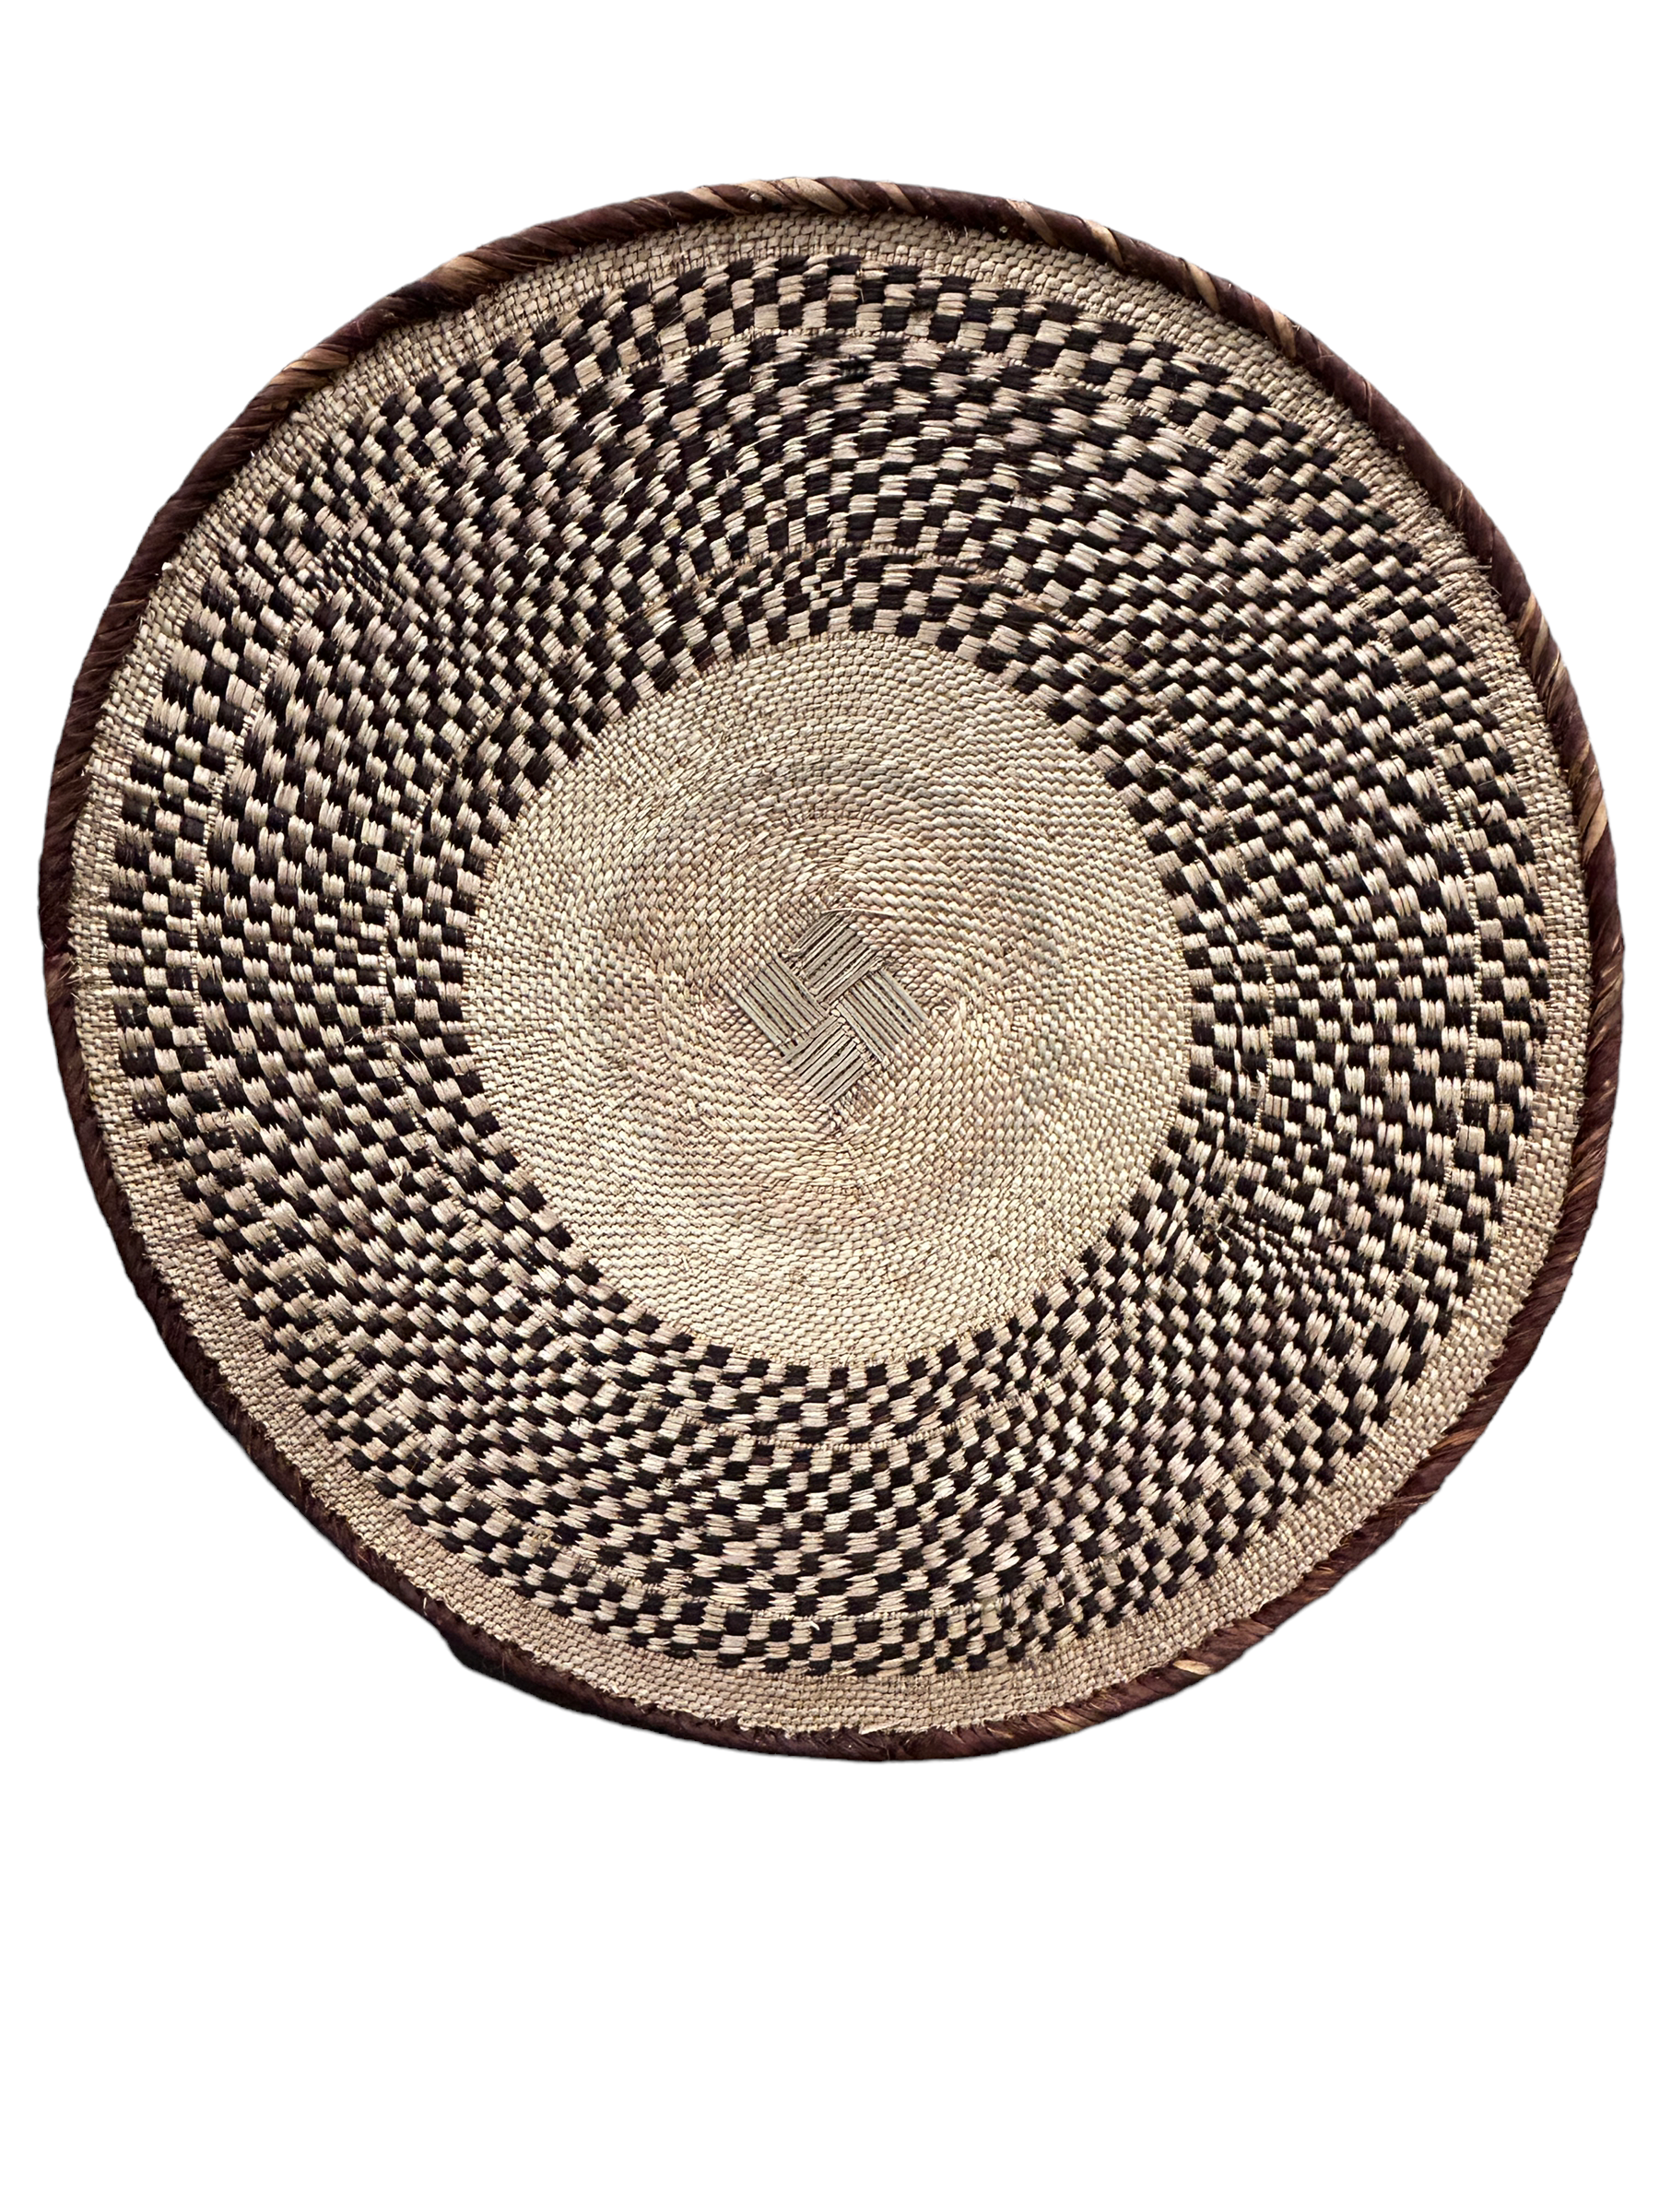 botanicalboysuk Tonga Basket Natural (68-01)